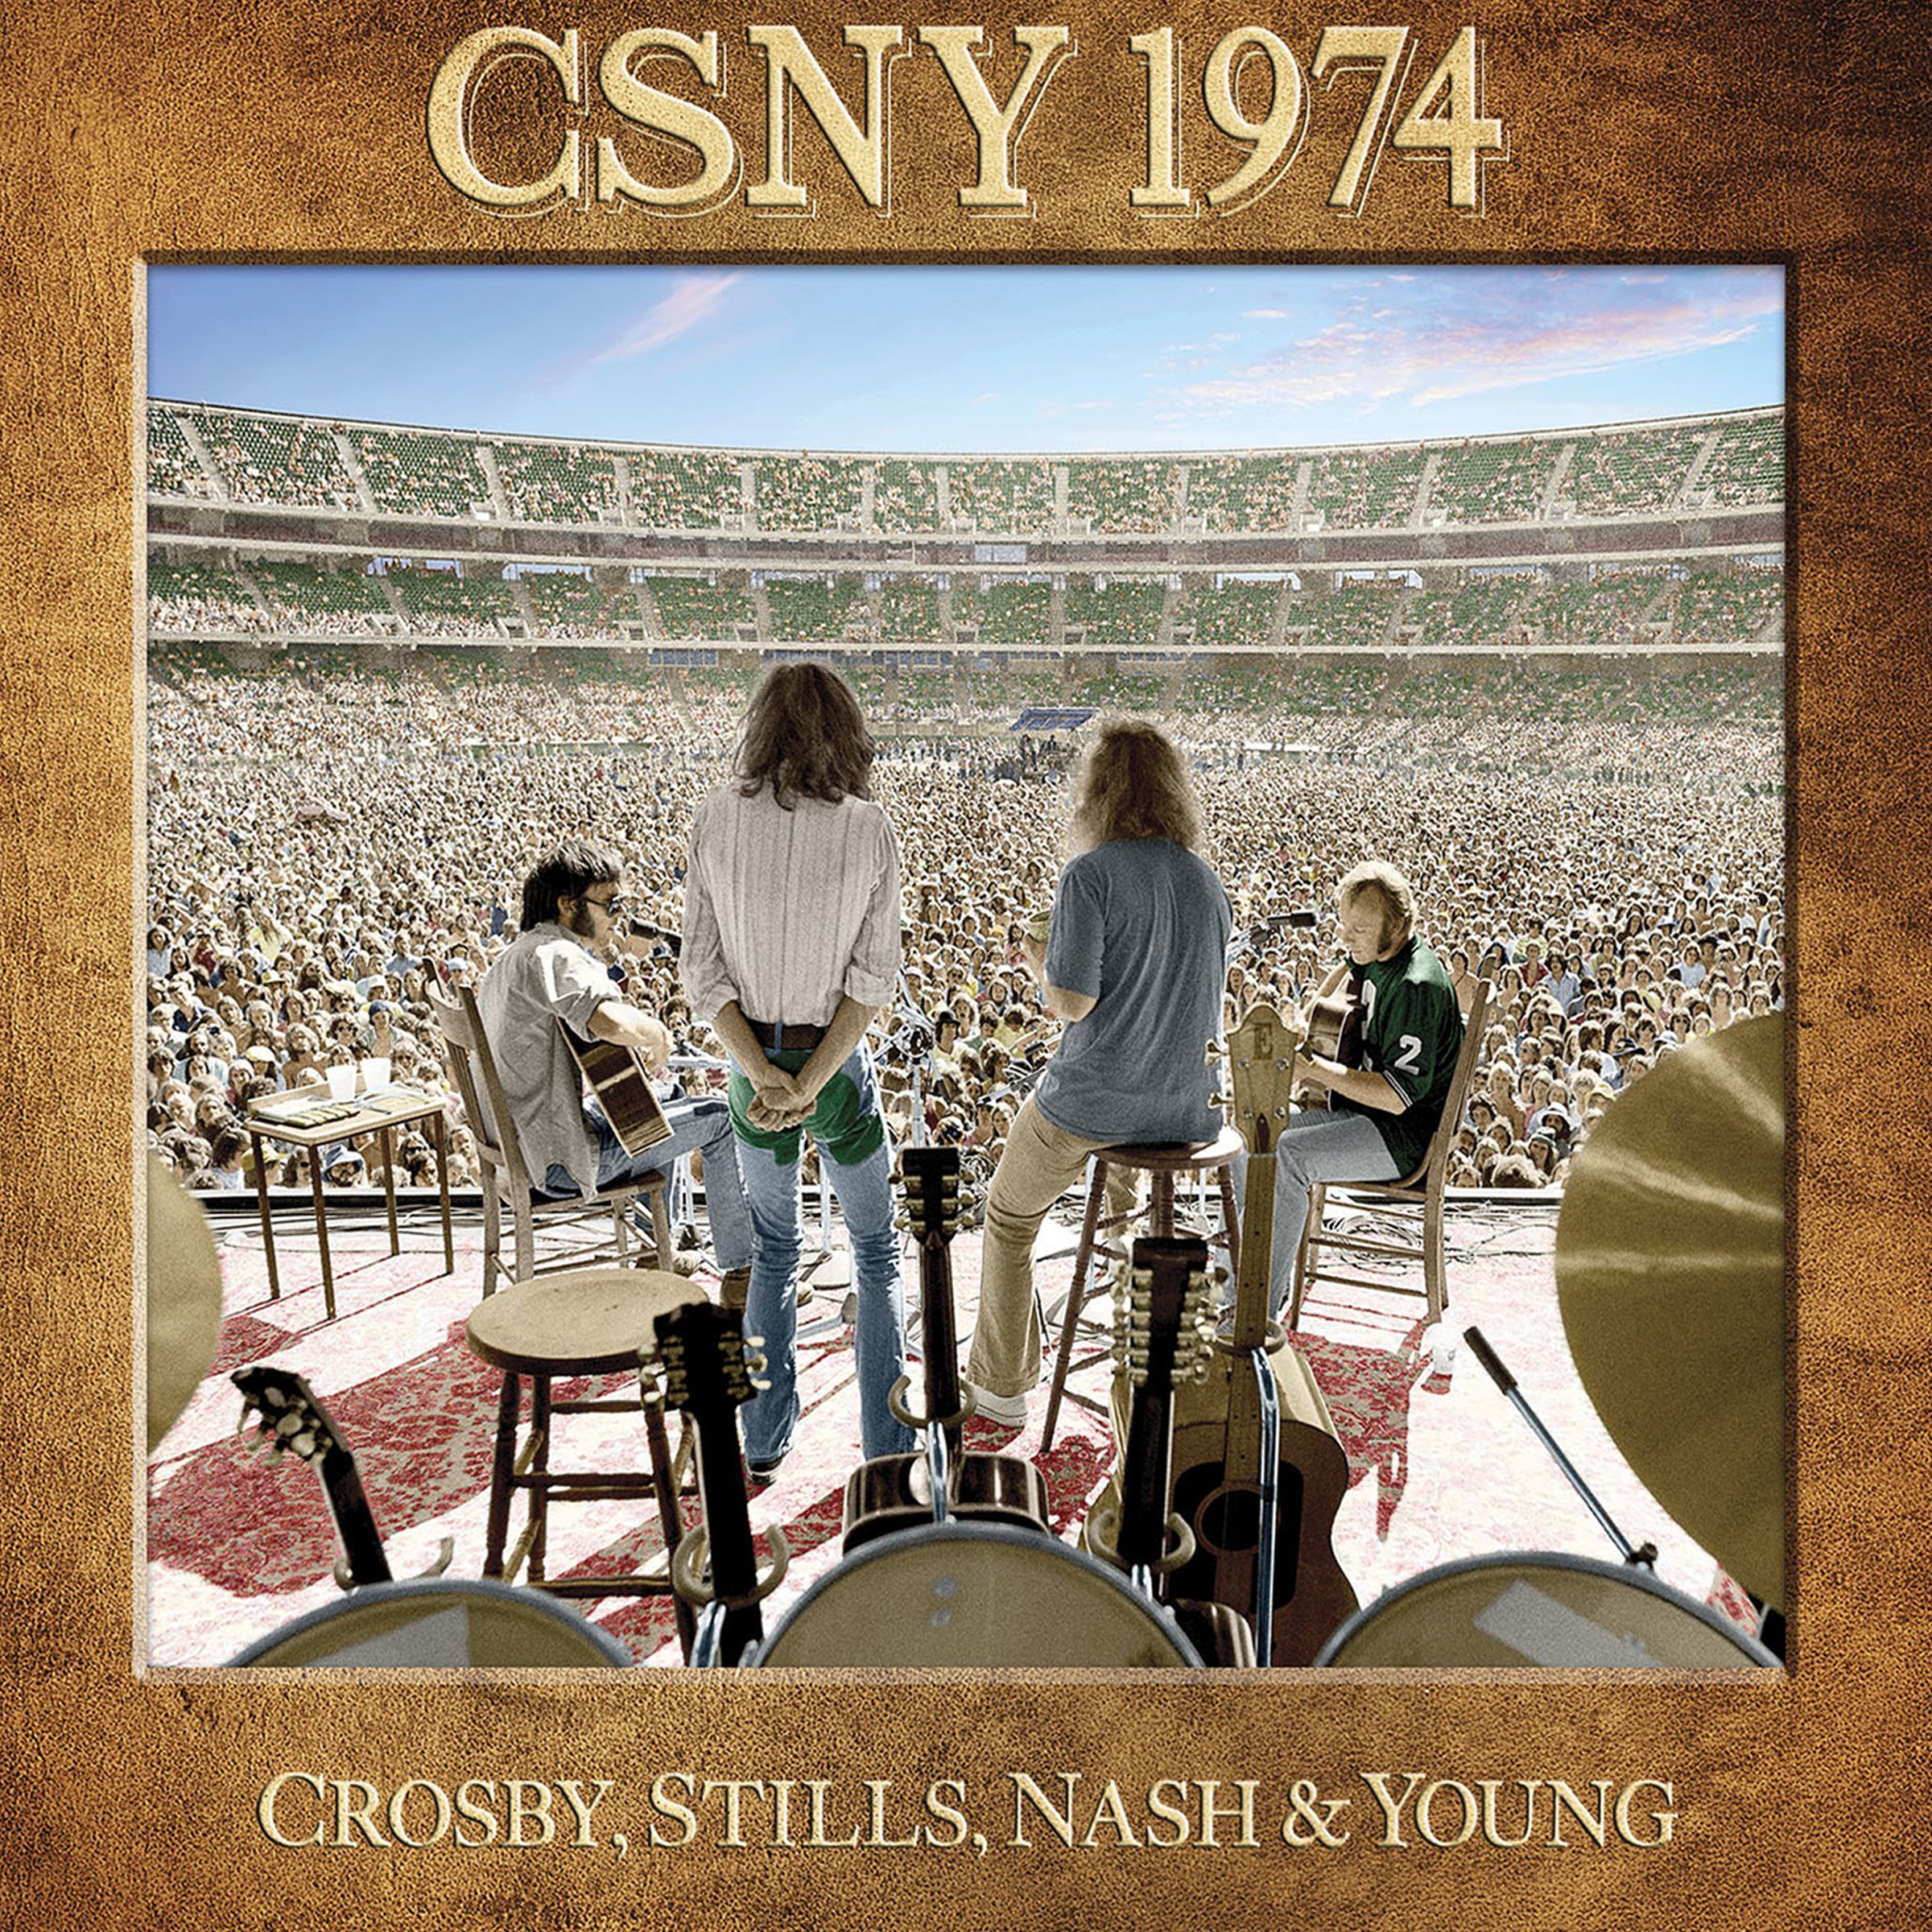 Crosby, Stills, Nash & Young - CSNY 1974 (1974/2014/2020) [FLAC 24bit/192kHz]